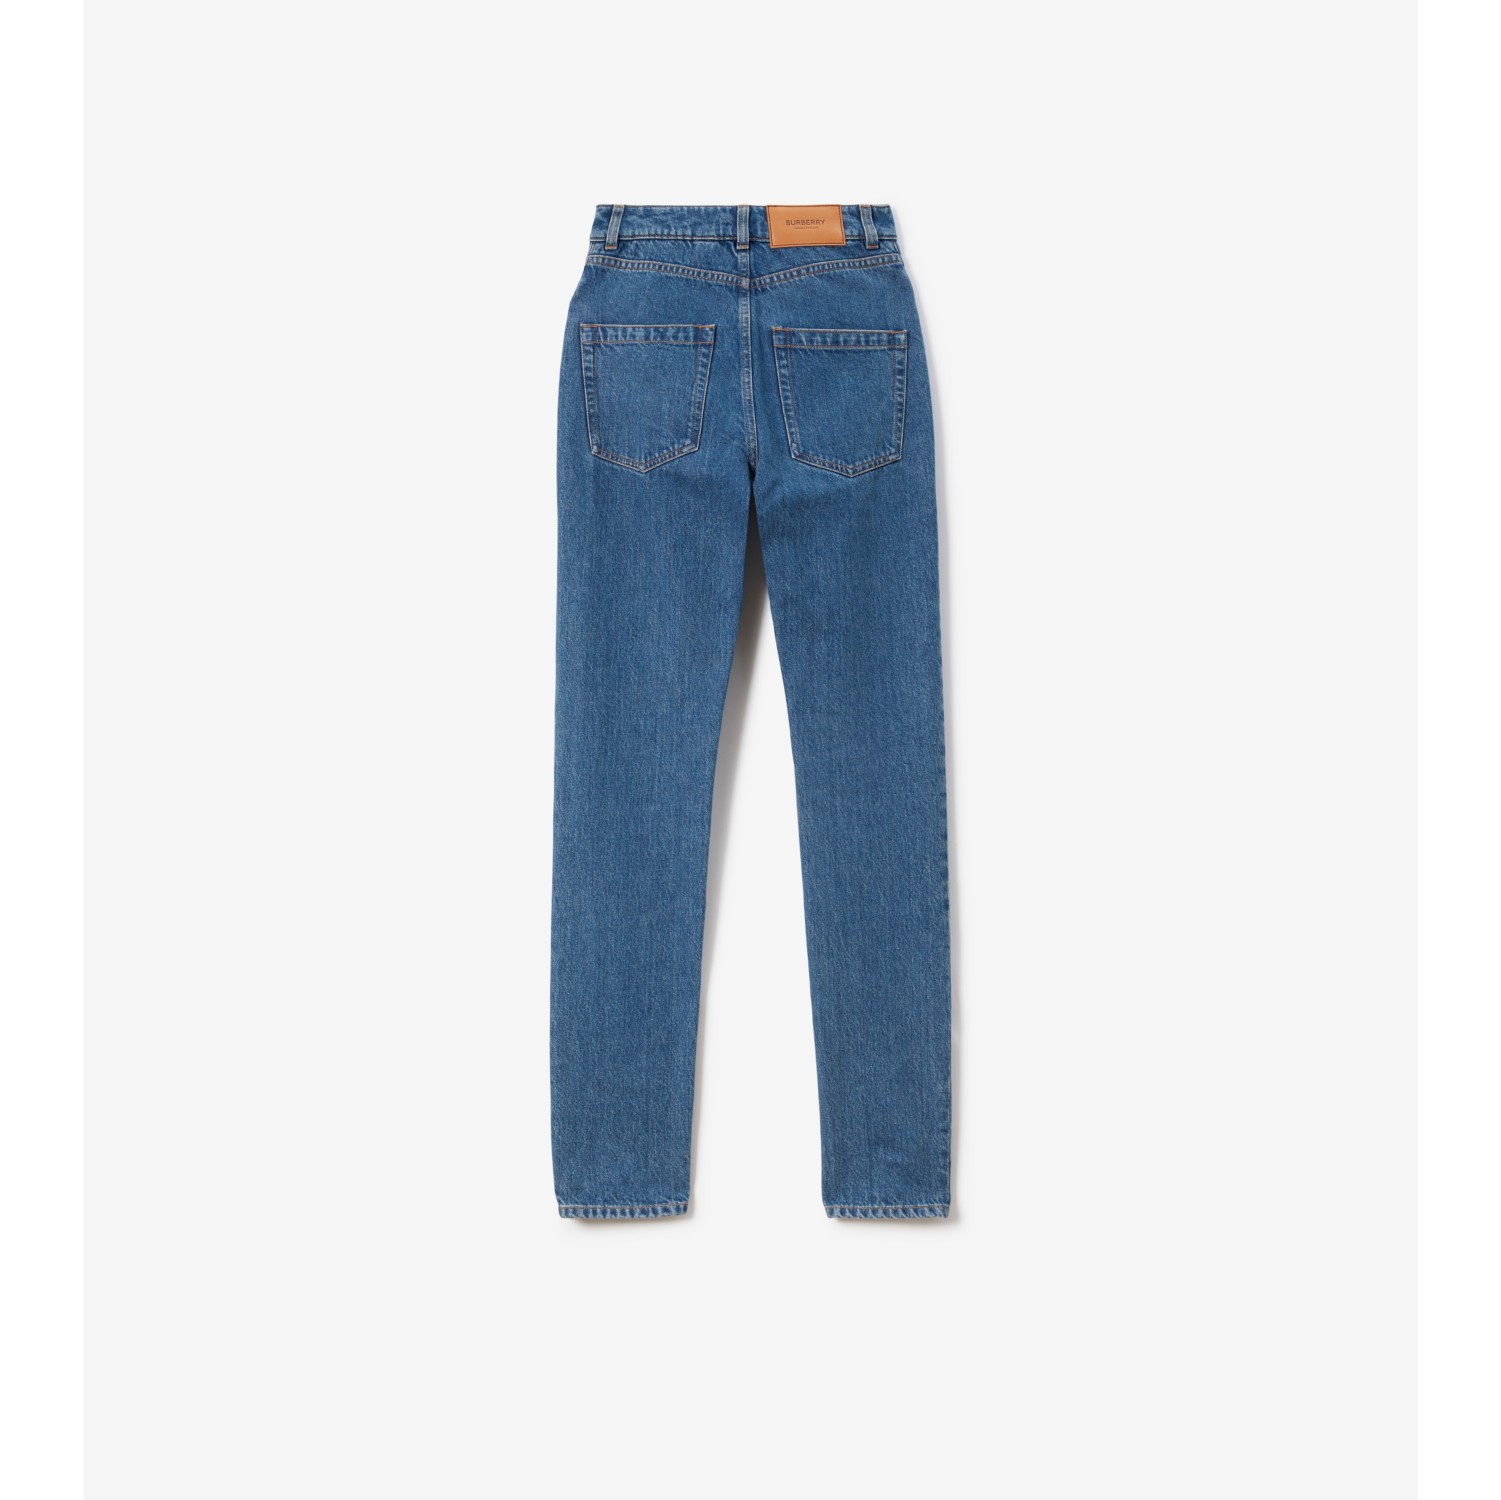 Slim Fit Jeans in Classic blue - Women, Cotton